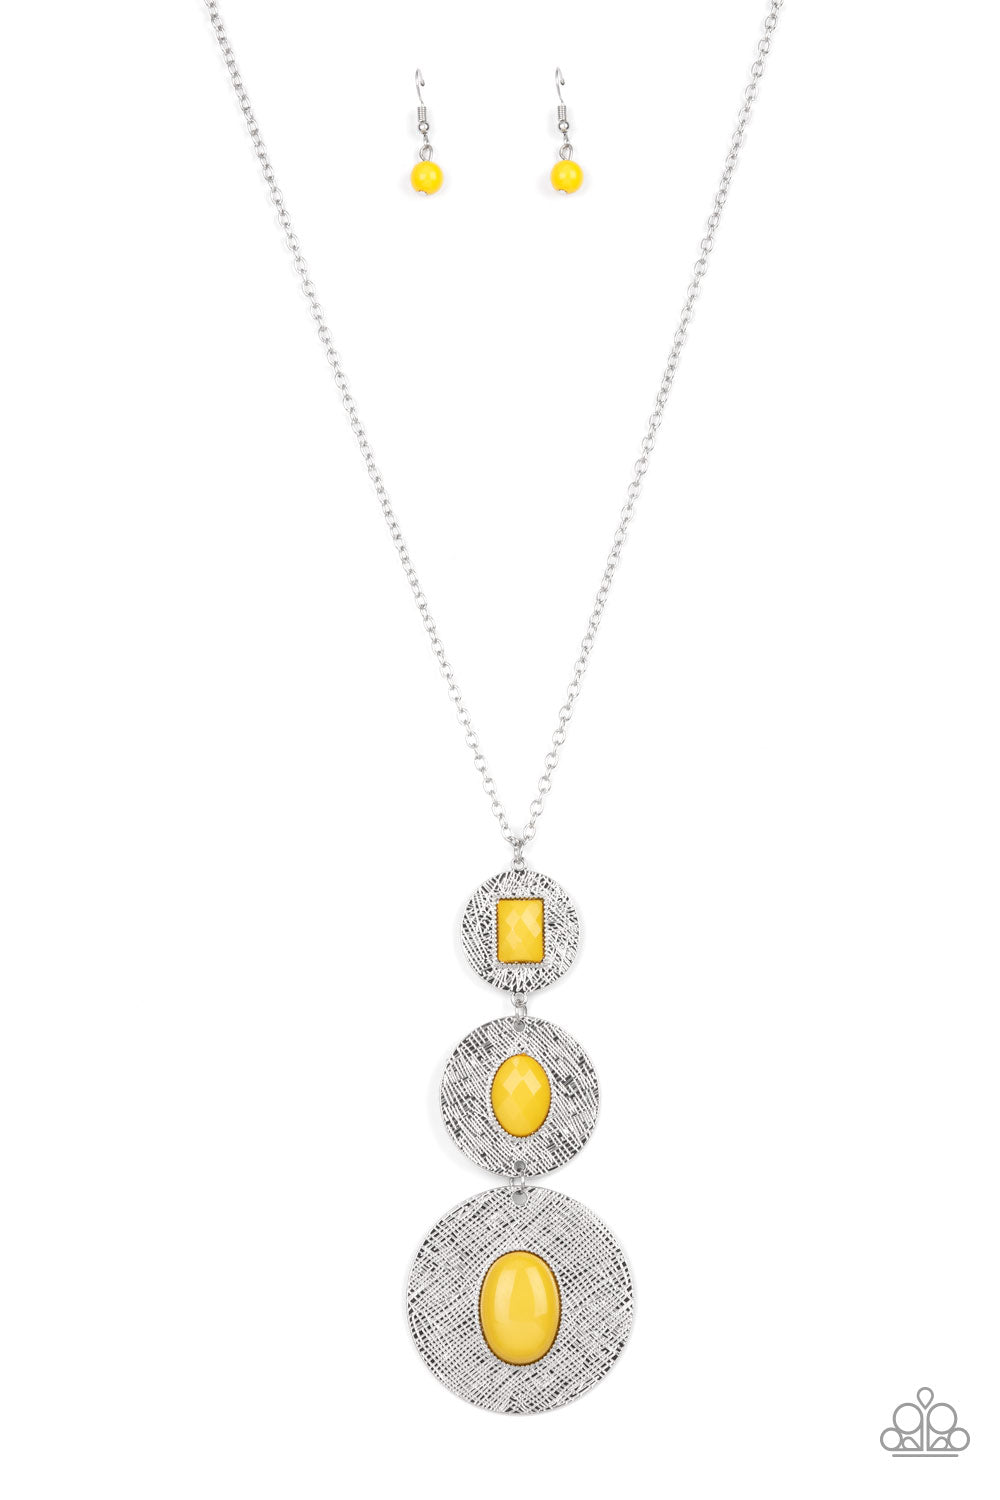 Talisman Trendsetter - Yellow Necklace freeshipping - JewLz4u Gemstone Gallery